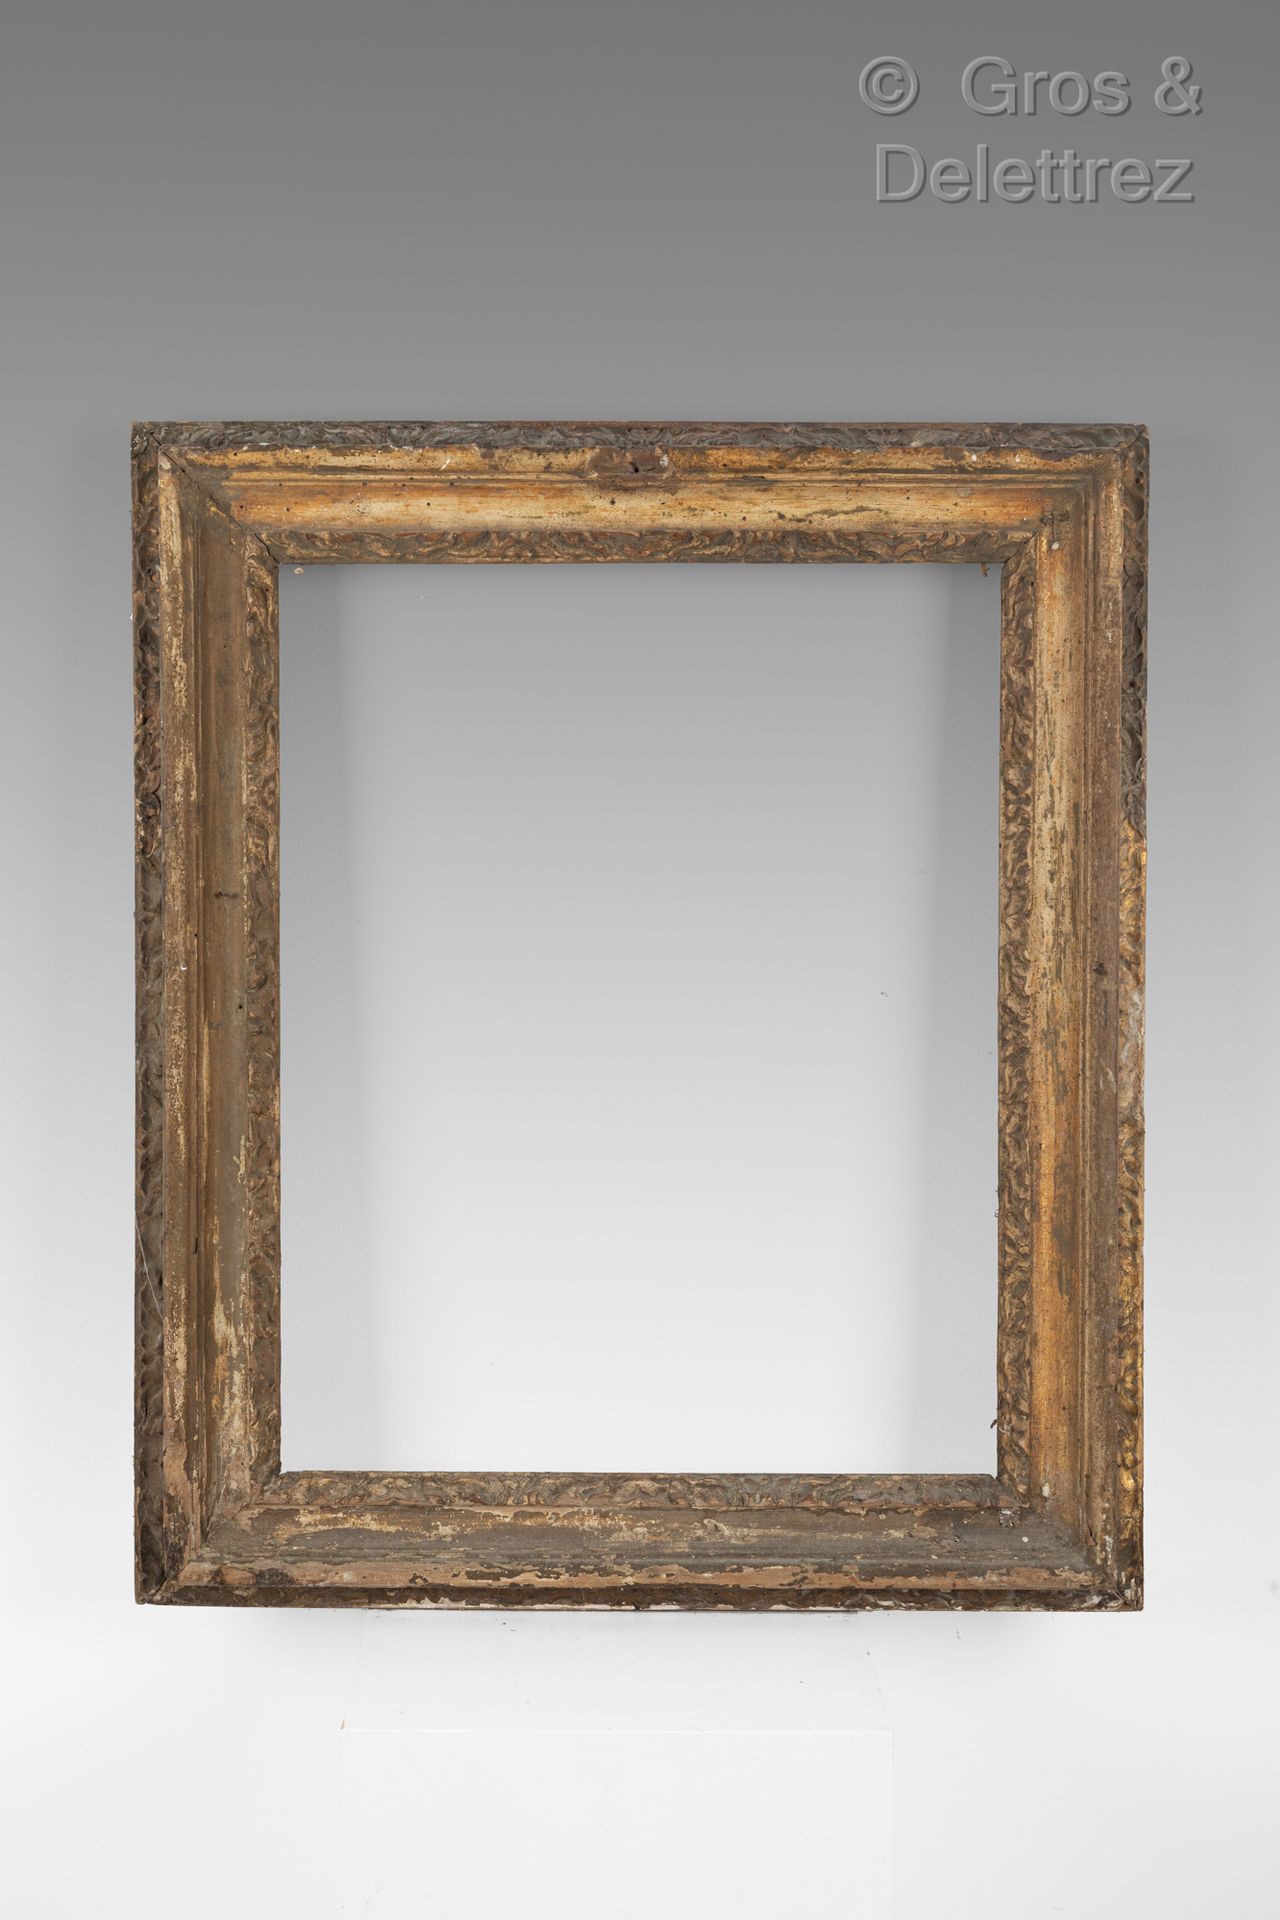 CARLO MARATTA Gilded wood frame

Rome XVIIth century

43 x 55 x 8,8 cm. Wear and&hellip;